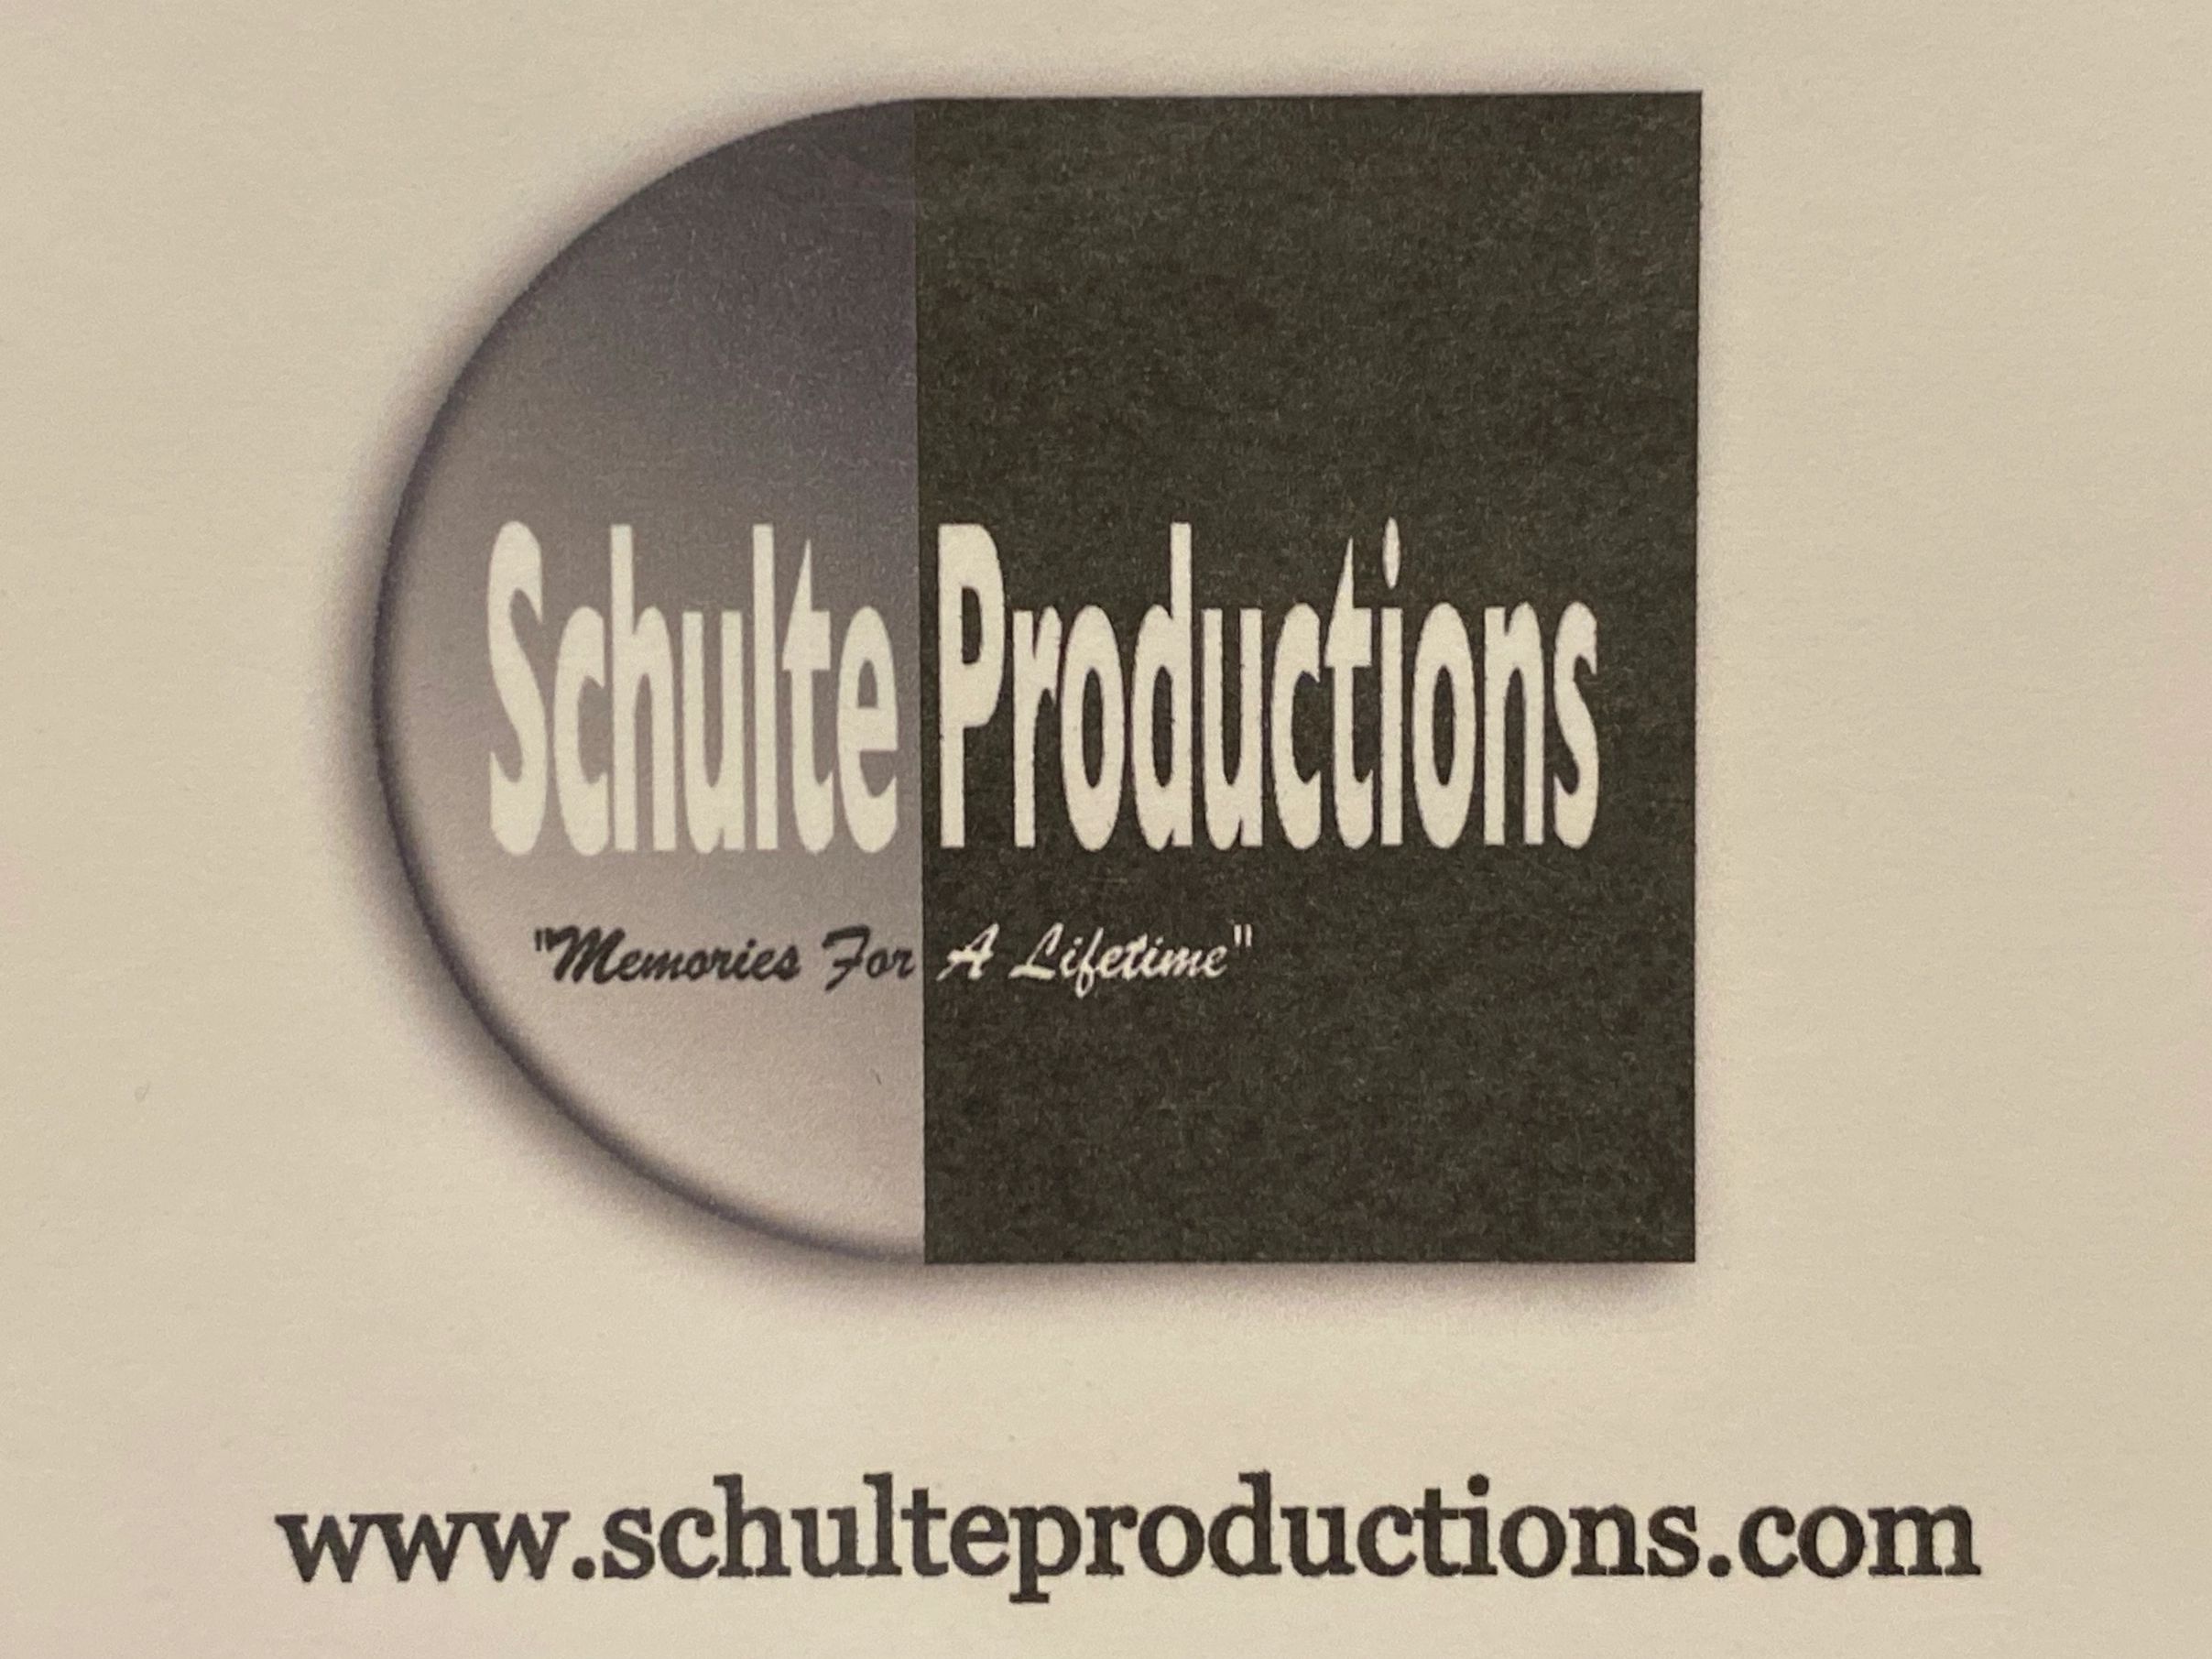 Schulte Productions Logo schulteproductions.com